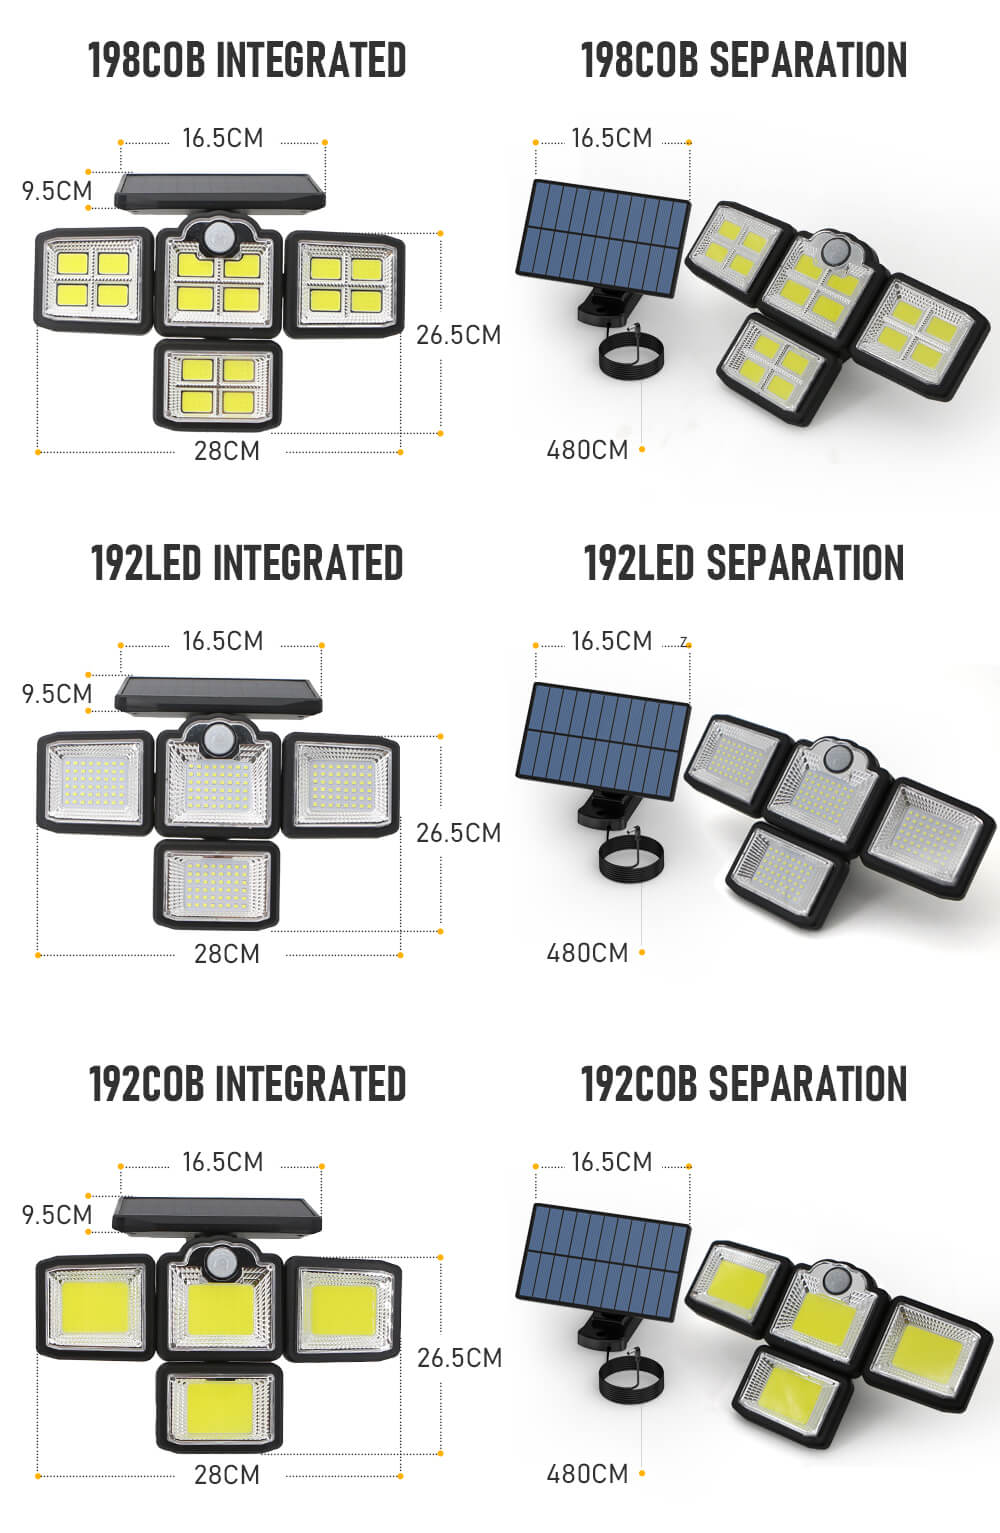 192 198 LED Outdoor Solar Lights 4 Head Motion Sensor 270 Wide Angle Lighting Waterproof Remote Control Solar Garden Wall Lamp